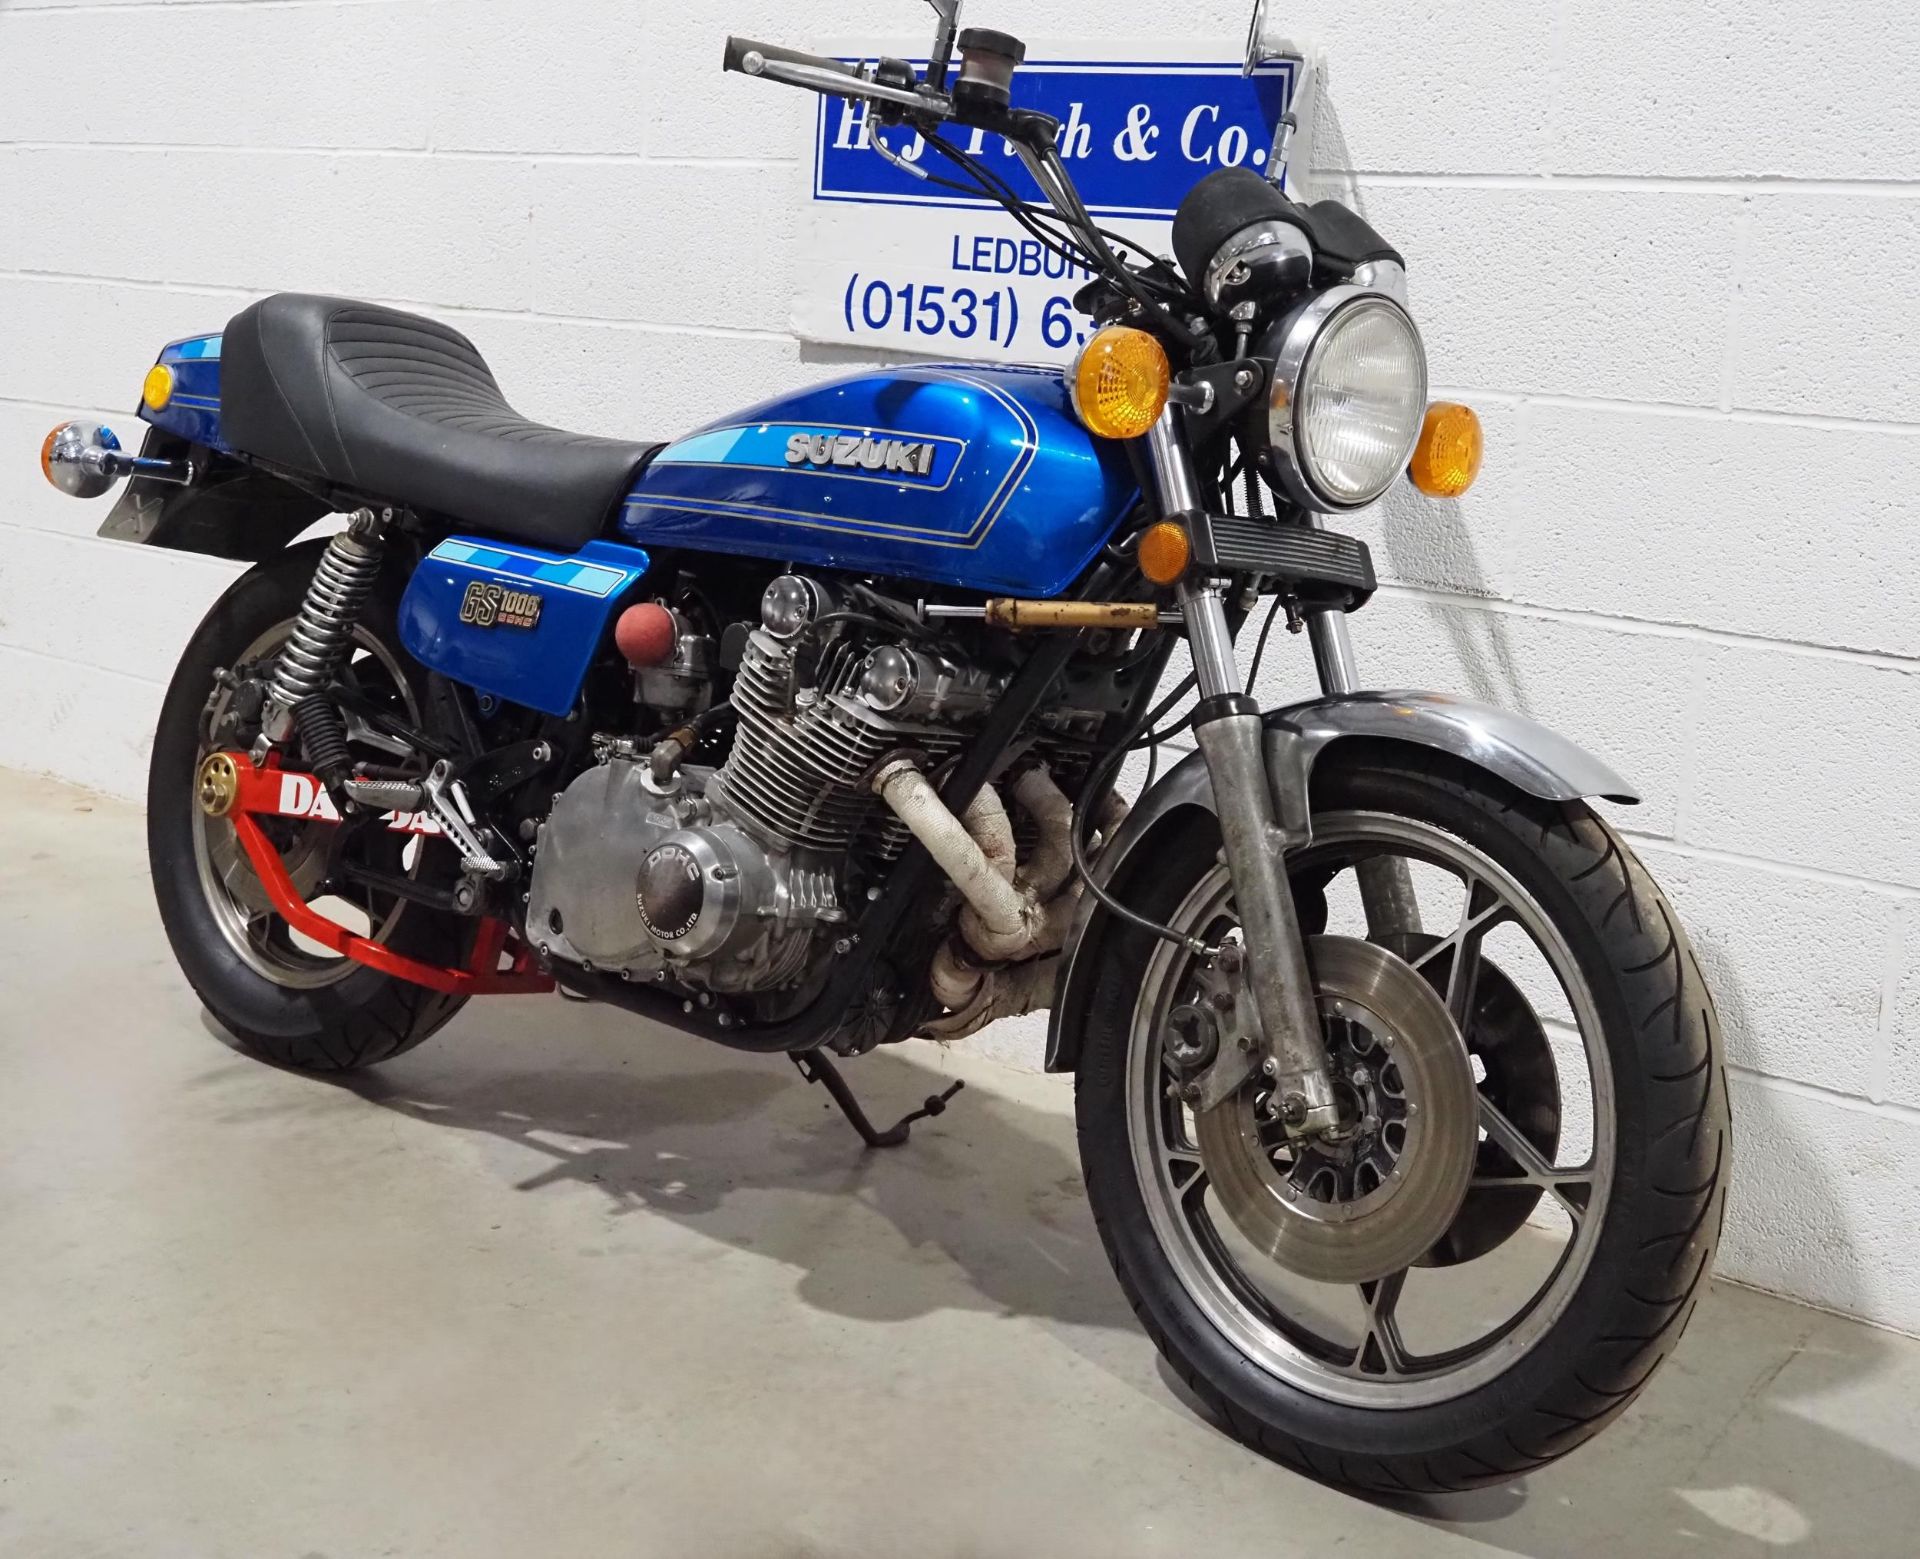 Suzuki GS1000 turbo motorcycle. 1981. 997cc Runs and rides. Reg. UNE 228X - Image 2 of 7